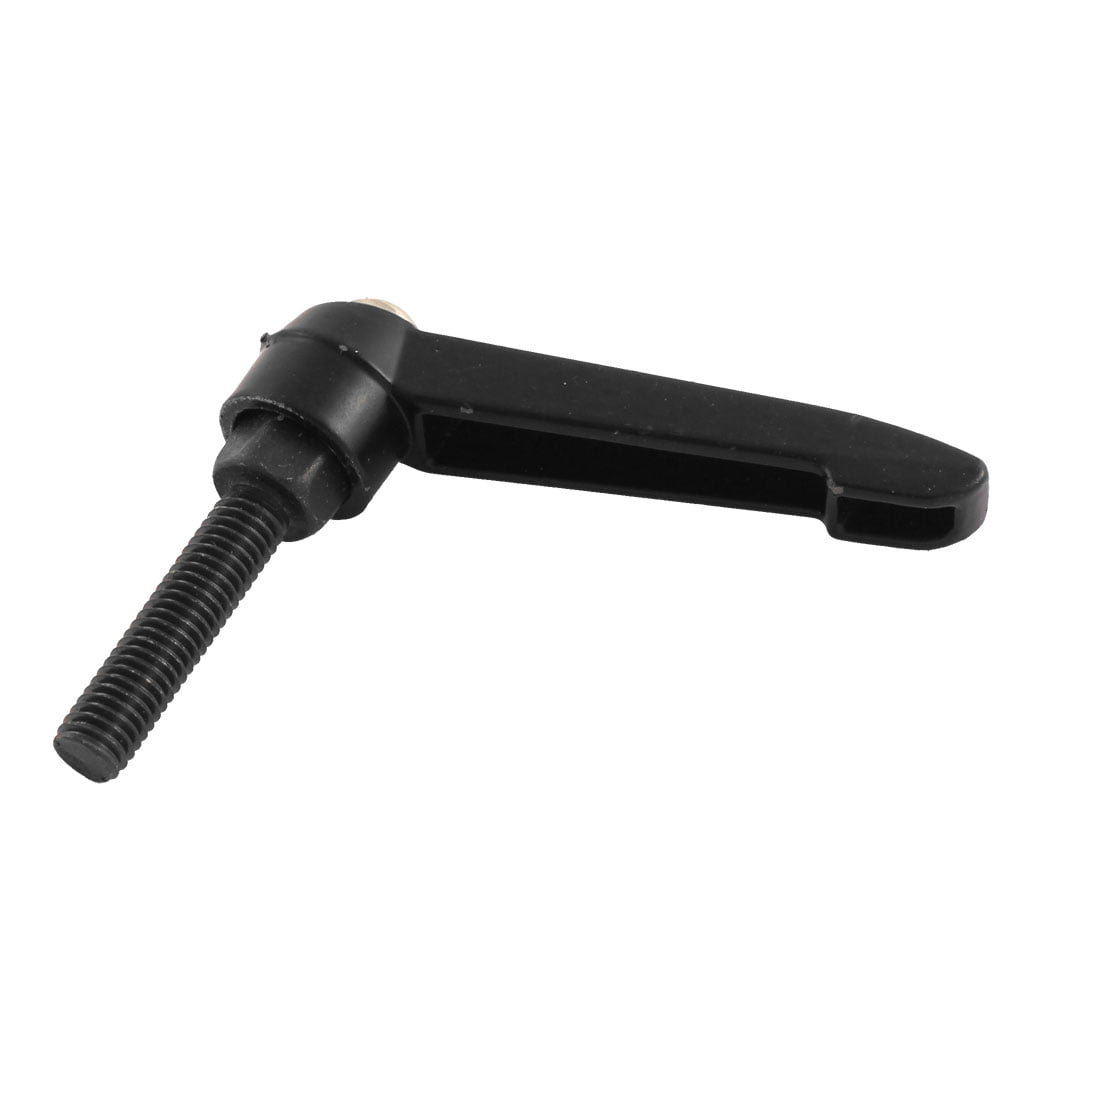 uxcell M8x35mm Male Thread Metal Adjustable Handle Lever Grip 3pcs Black 